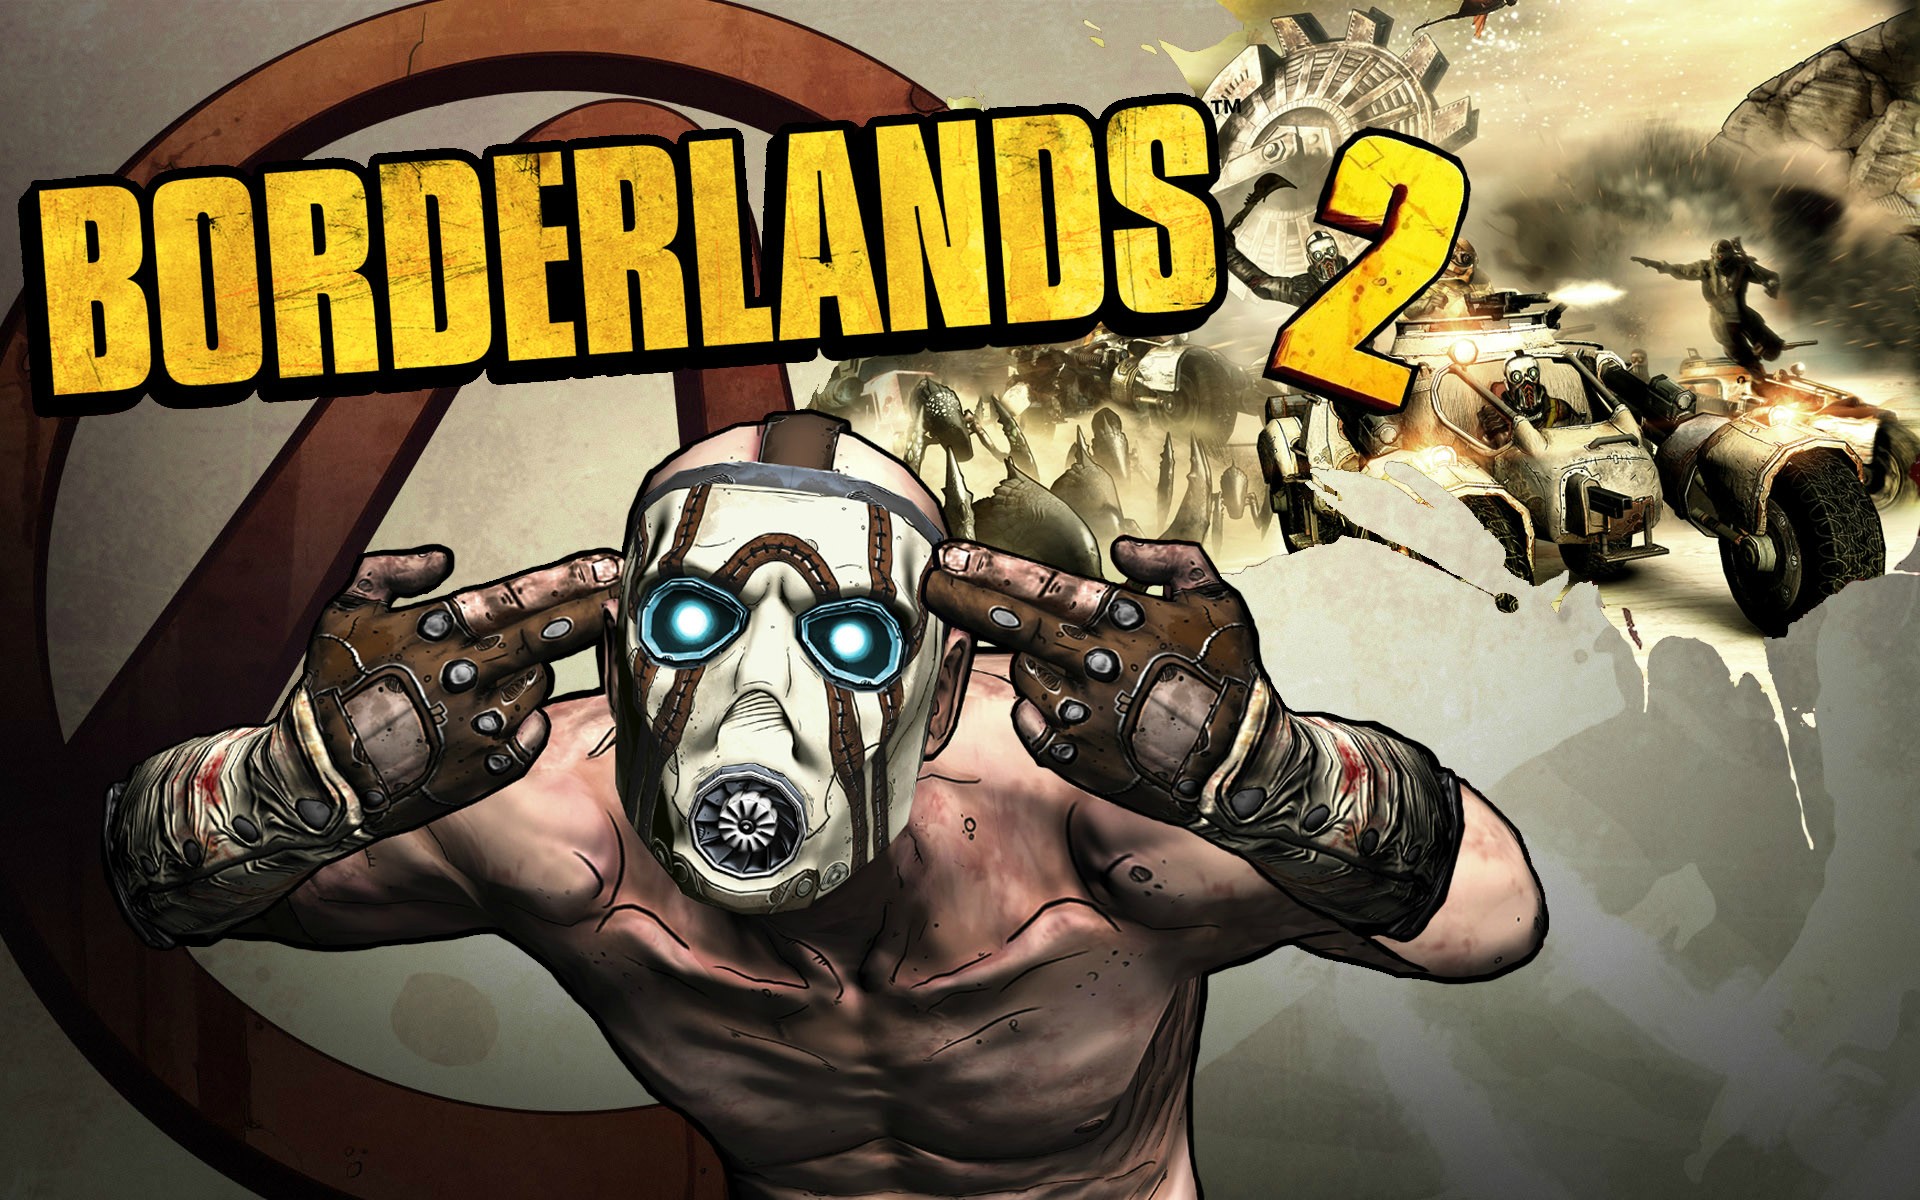 Update on Vita Iteration of Borderlands 2